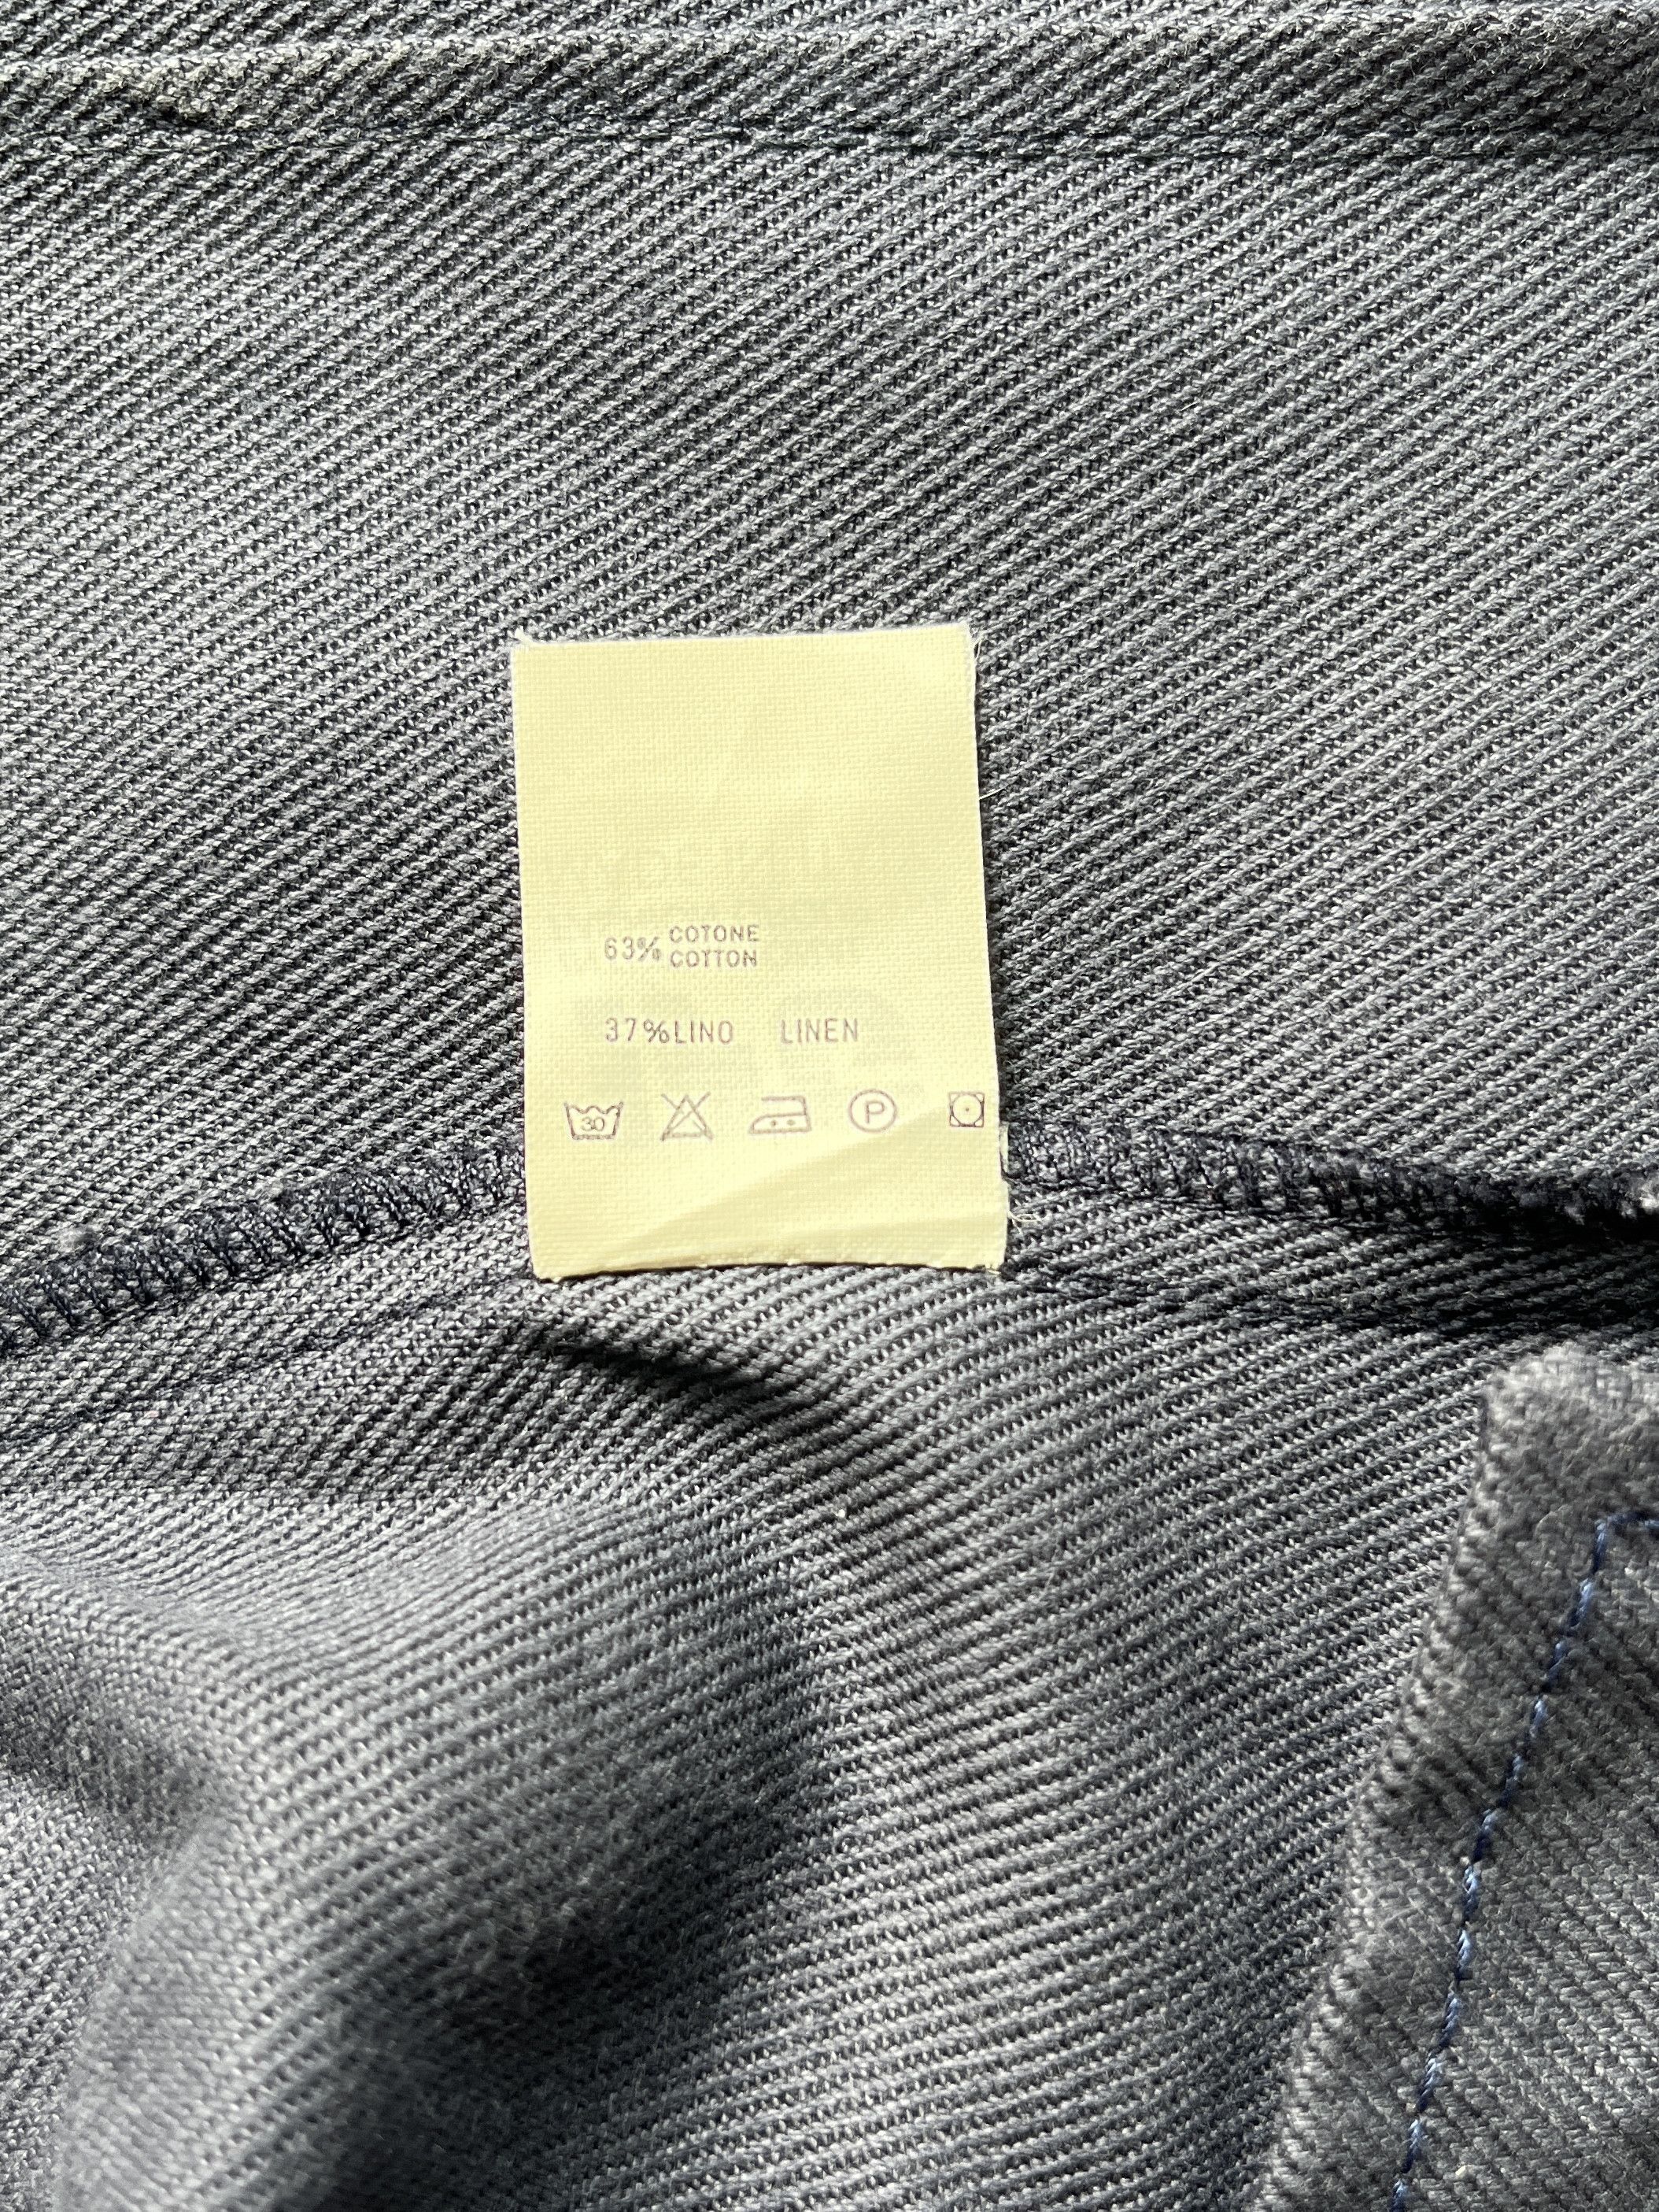 Jean Paul Gaultier ⚡️QUICK SALE⚡️1980s' Jean Paul Gaultier Grey Jacket Size S / US 4 / IT 40 - 5 Thumbnail